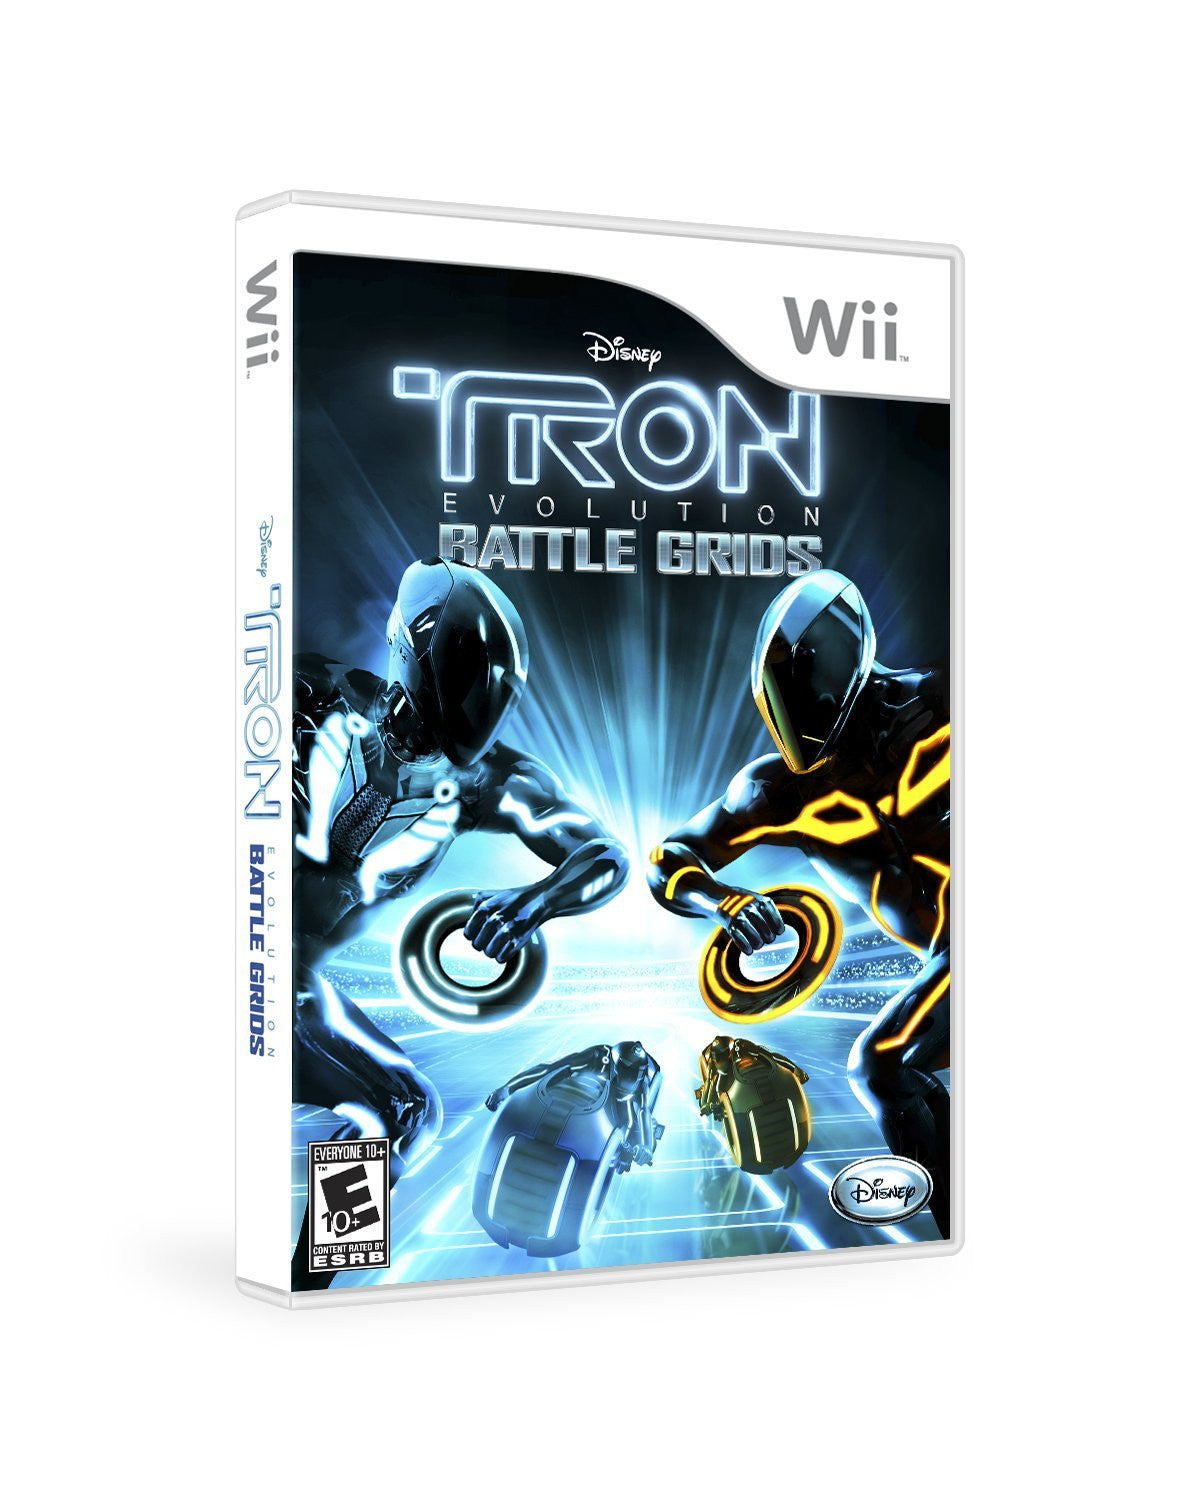 TRON: Evolution - Battle Grids - Nintendo Wii